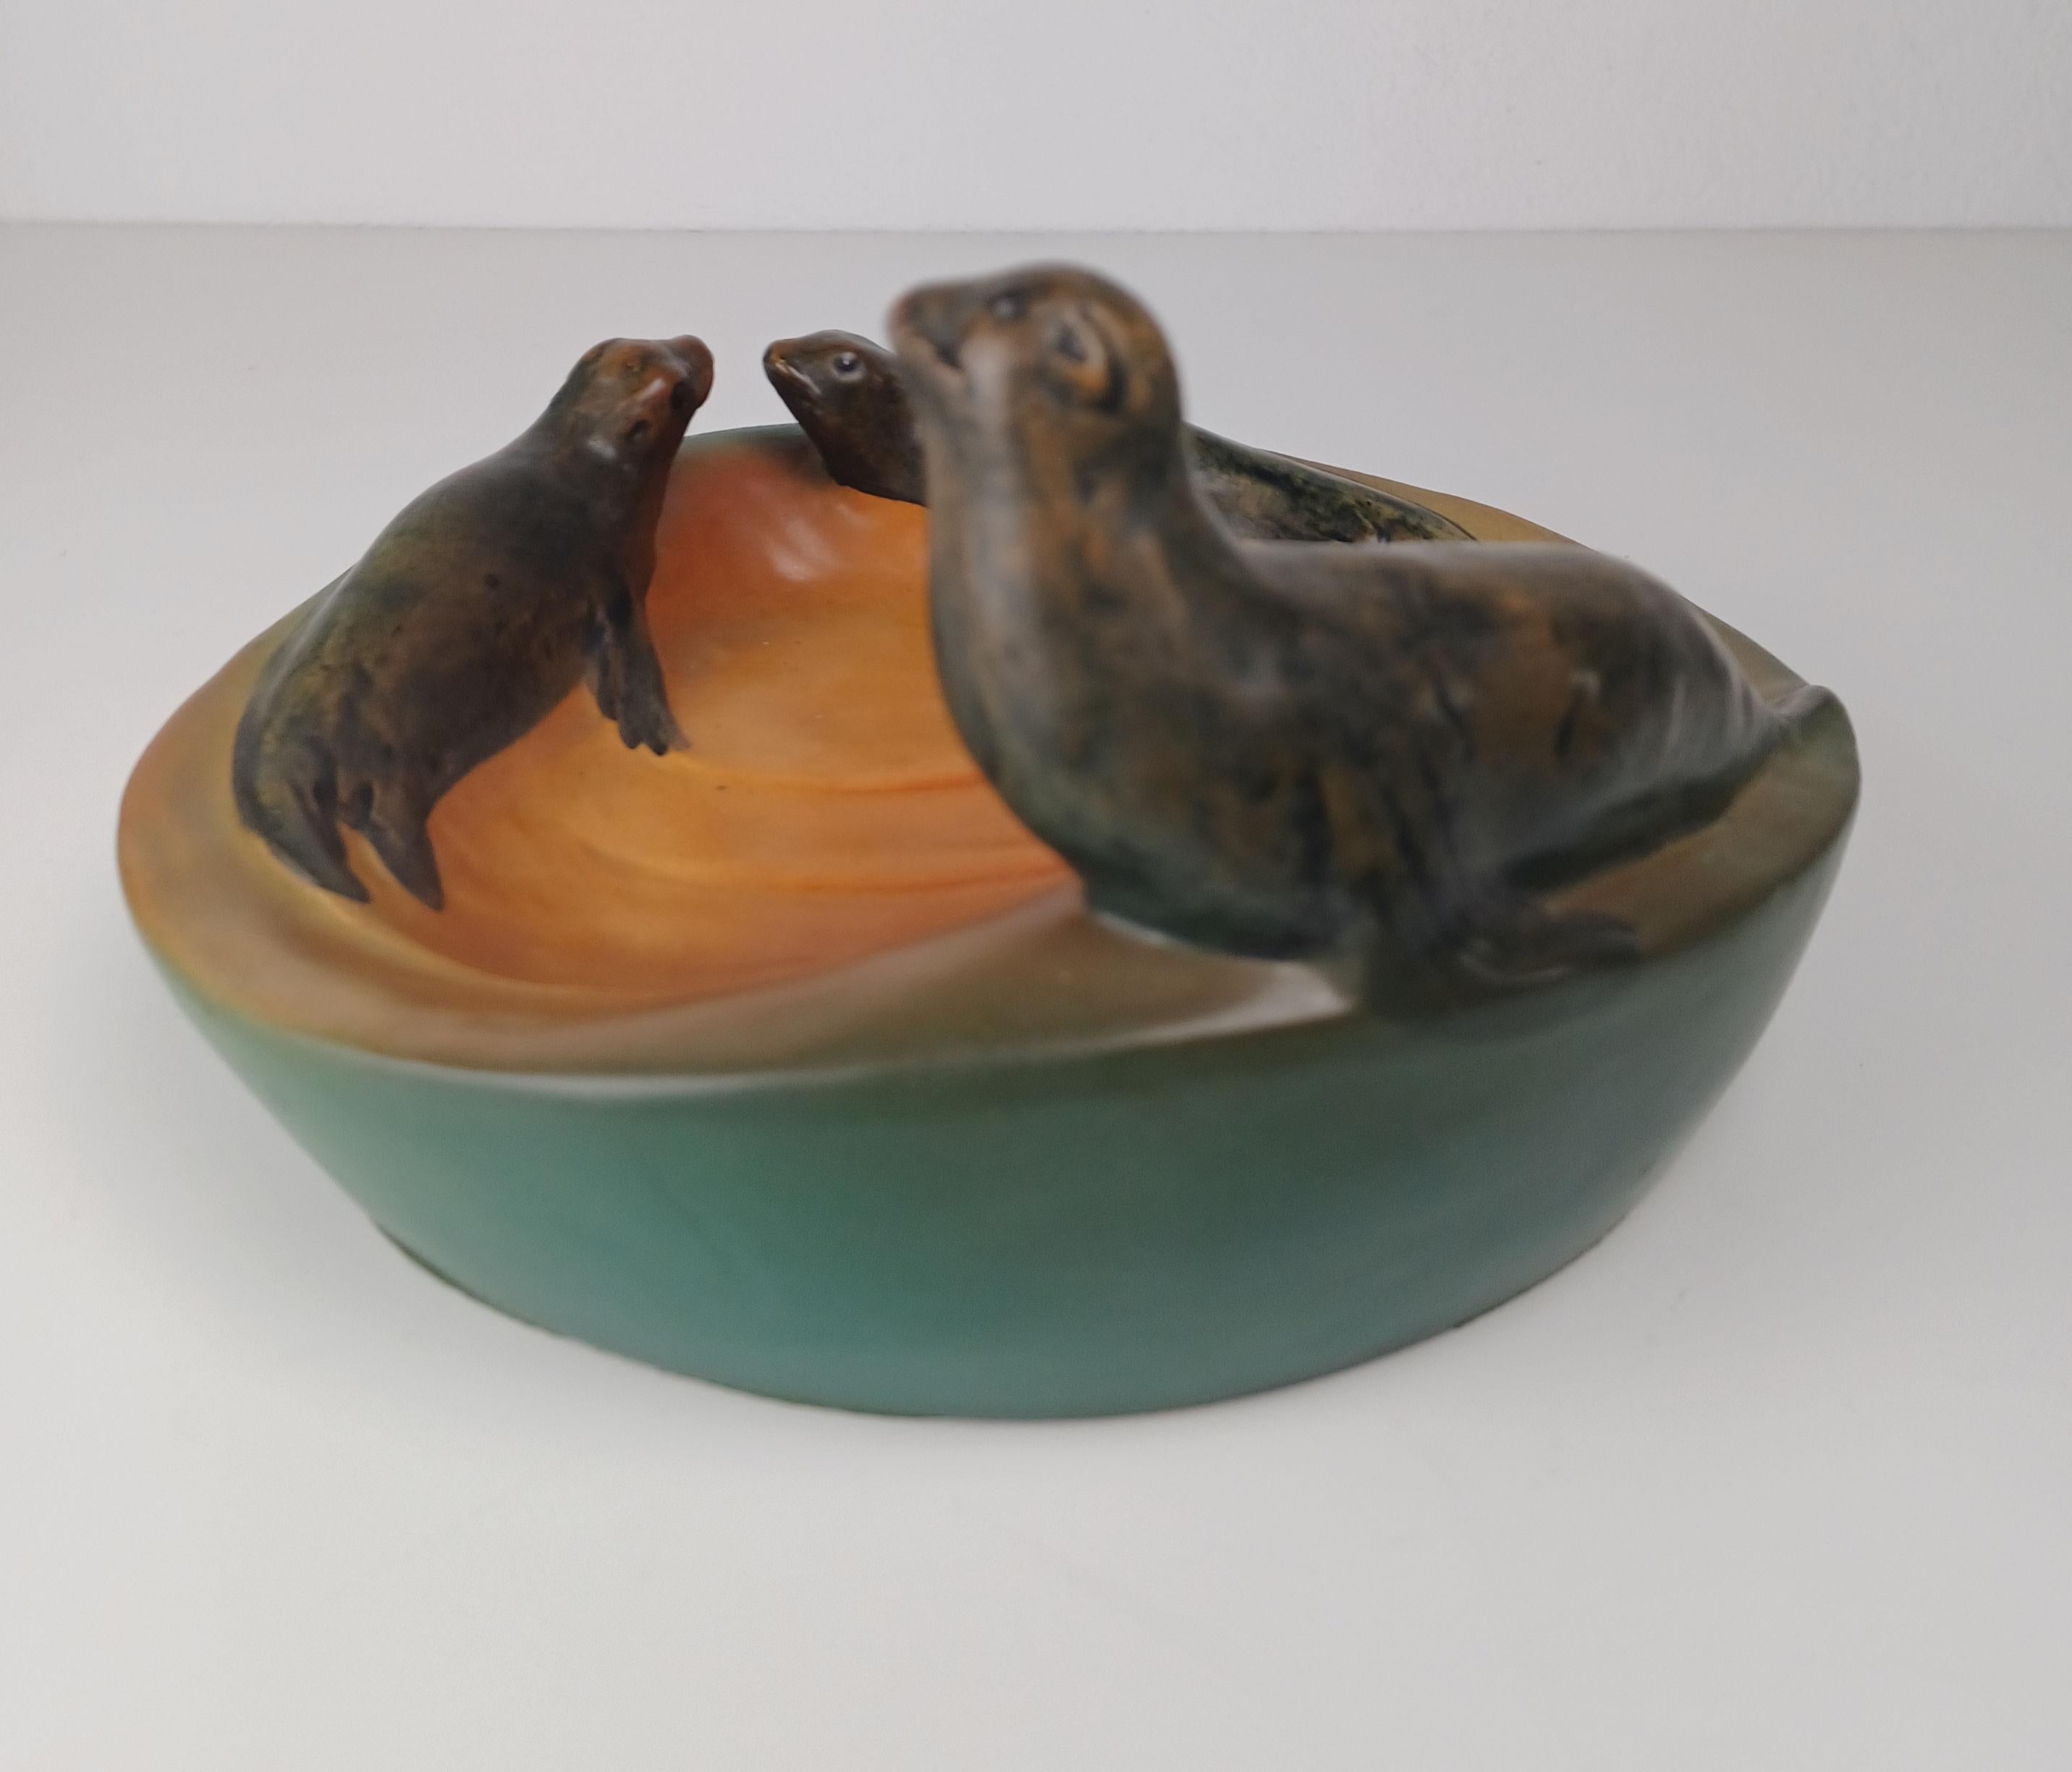 Ceramic 1910's Danish Art Nouveau Handcrafted Sealion Bowl - Ash Tray by P. Ipsens Enke